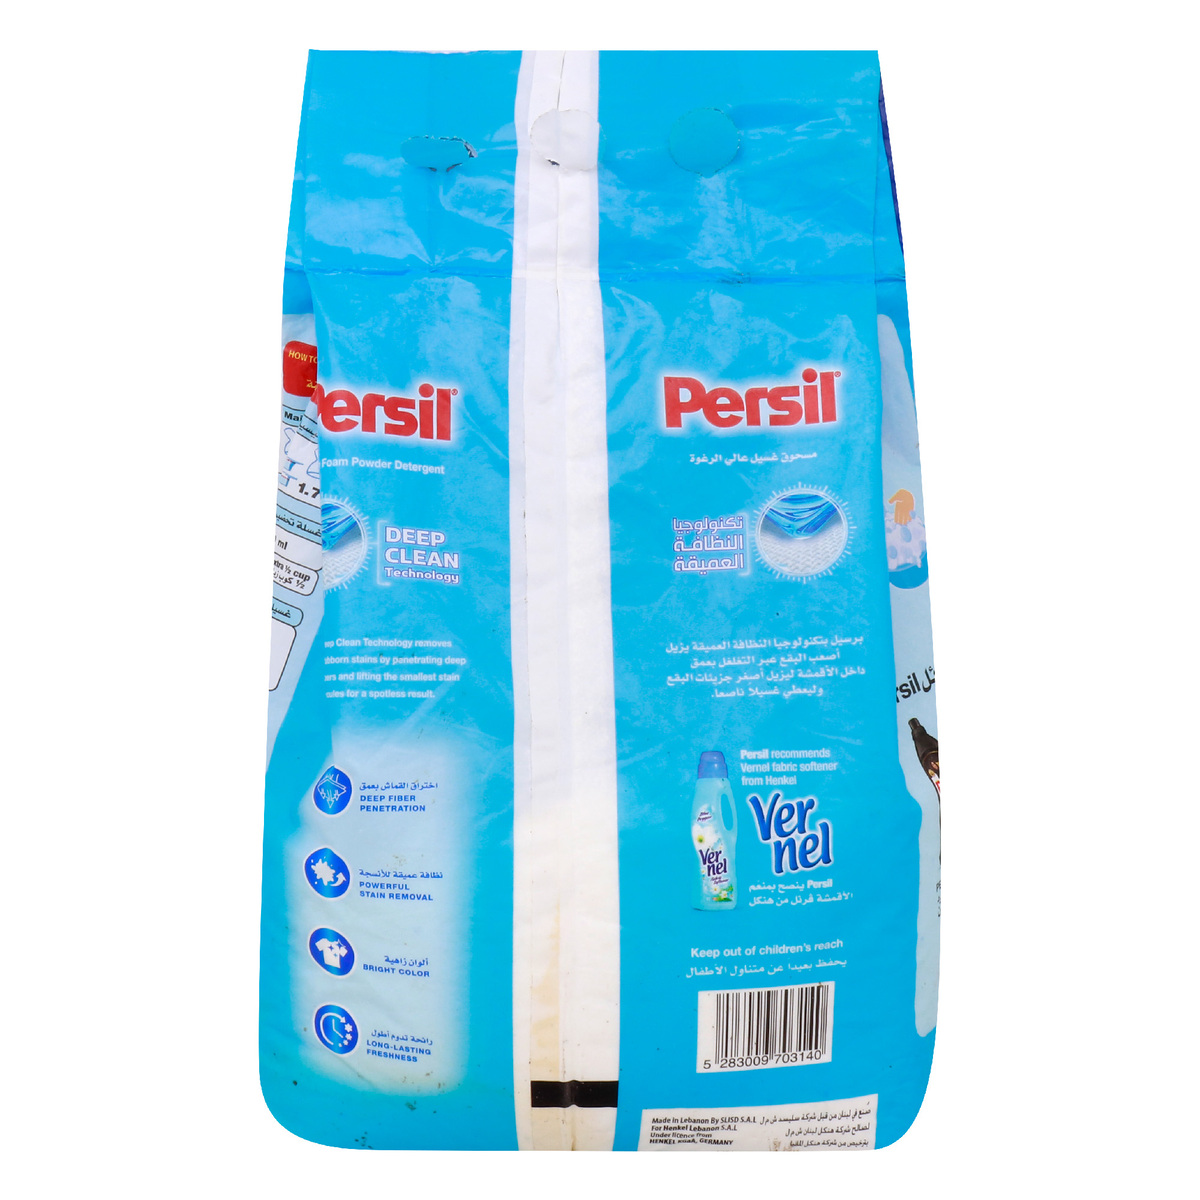 Persil Deep Clean High Foam Powder Detergent 2 kg